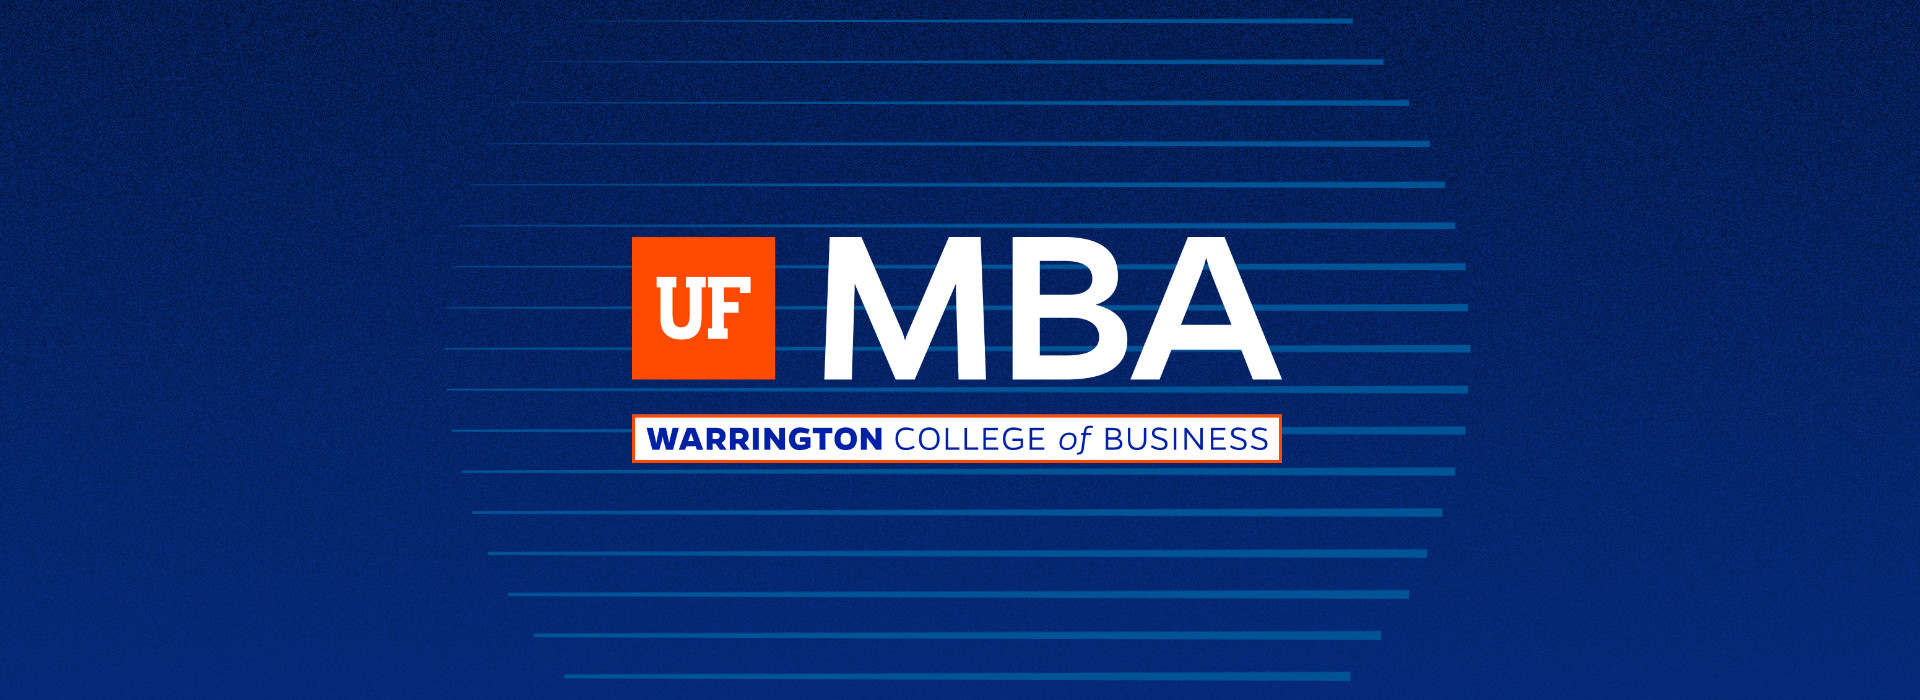 UF MBA logo on a dark blue background